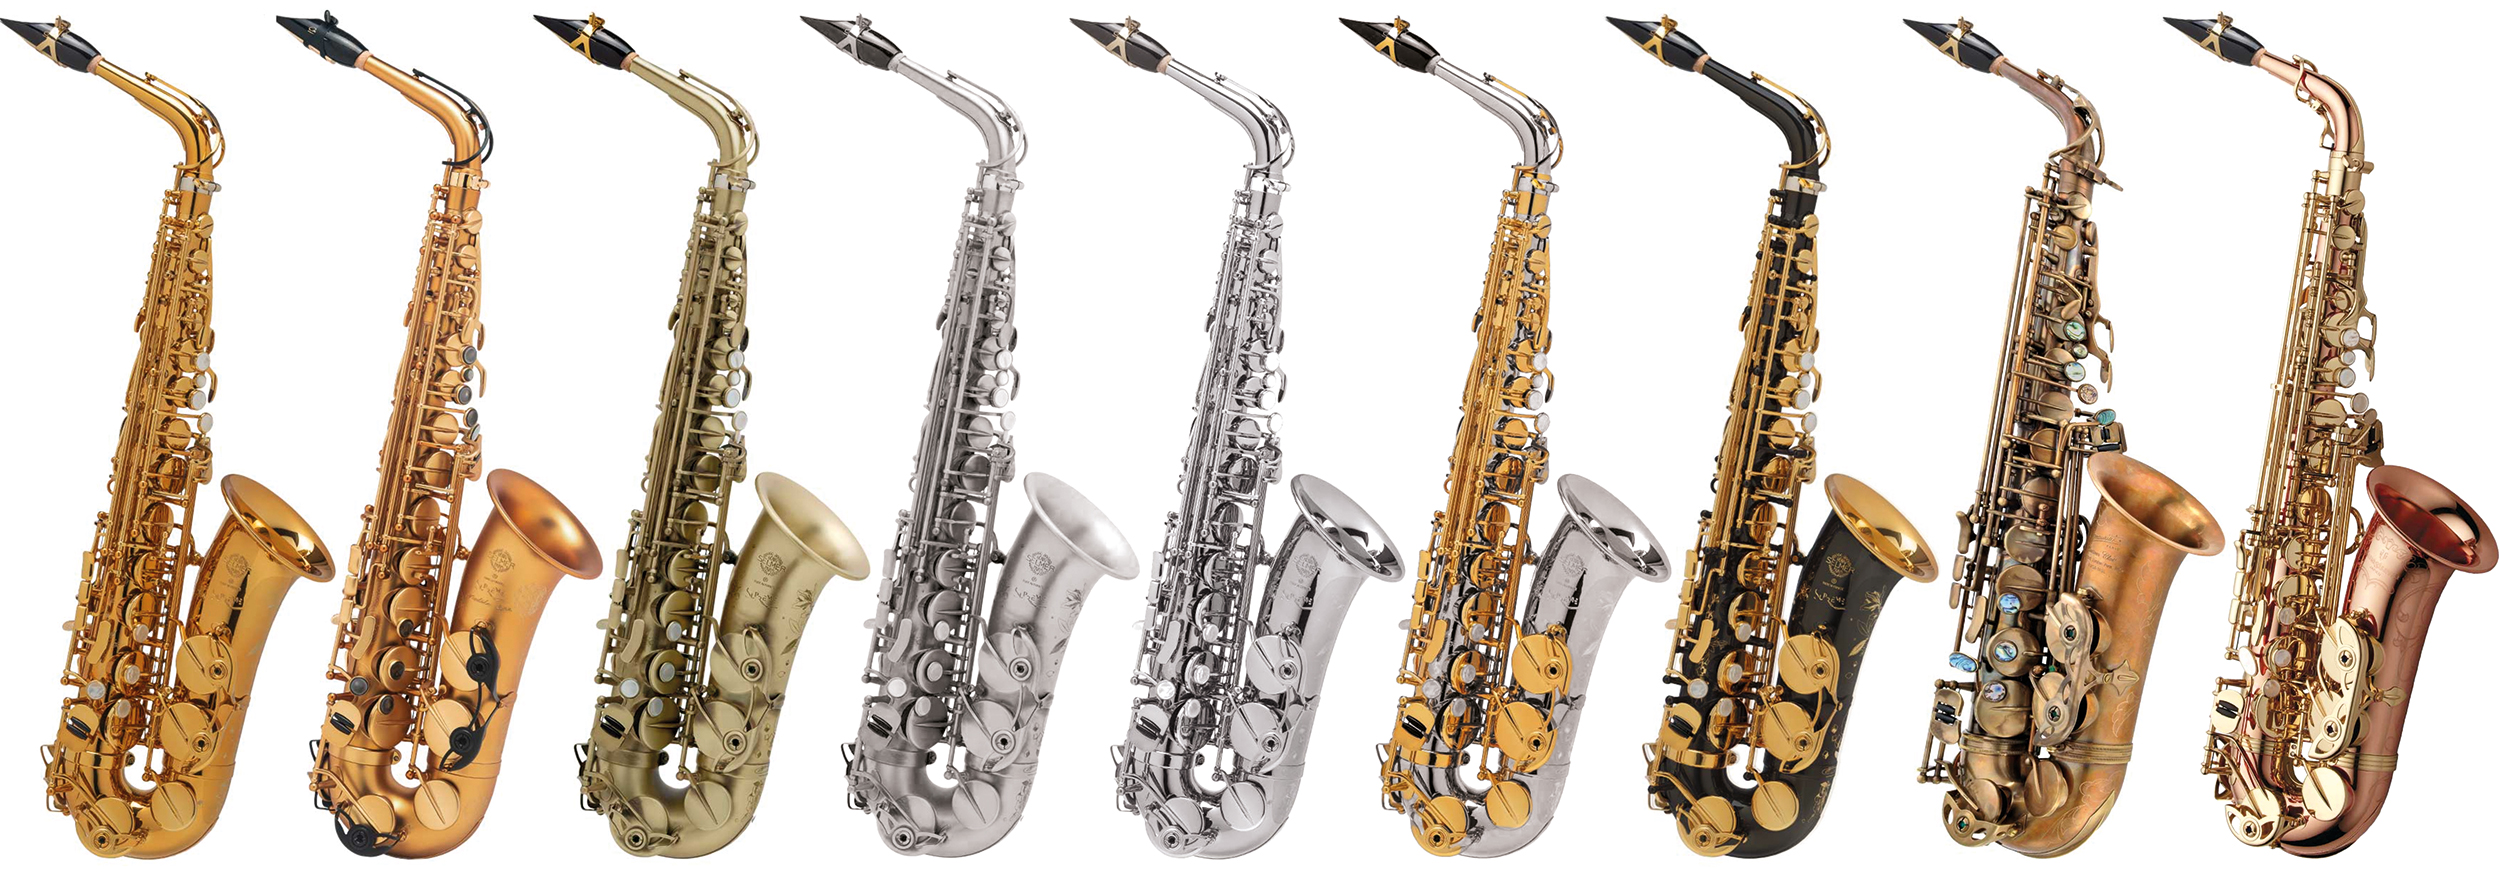 Alt-Saxophon_Modelle